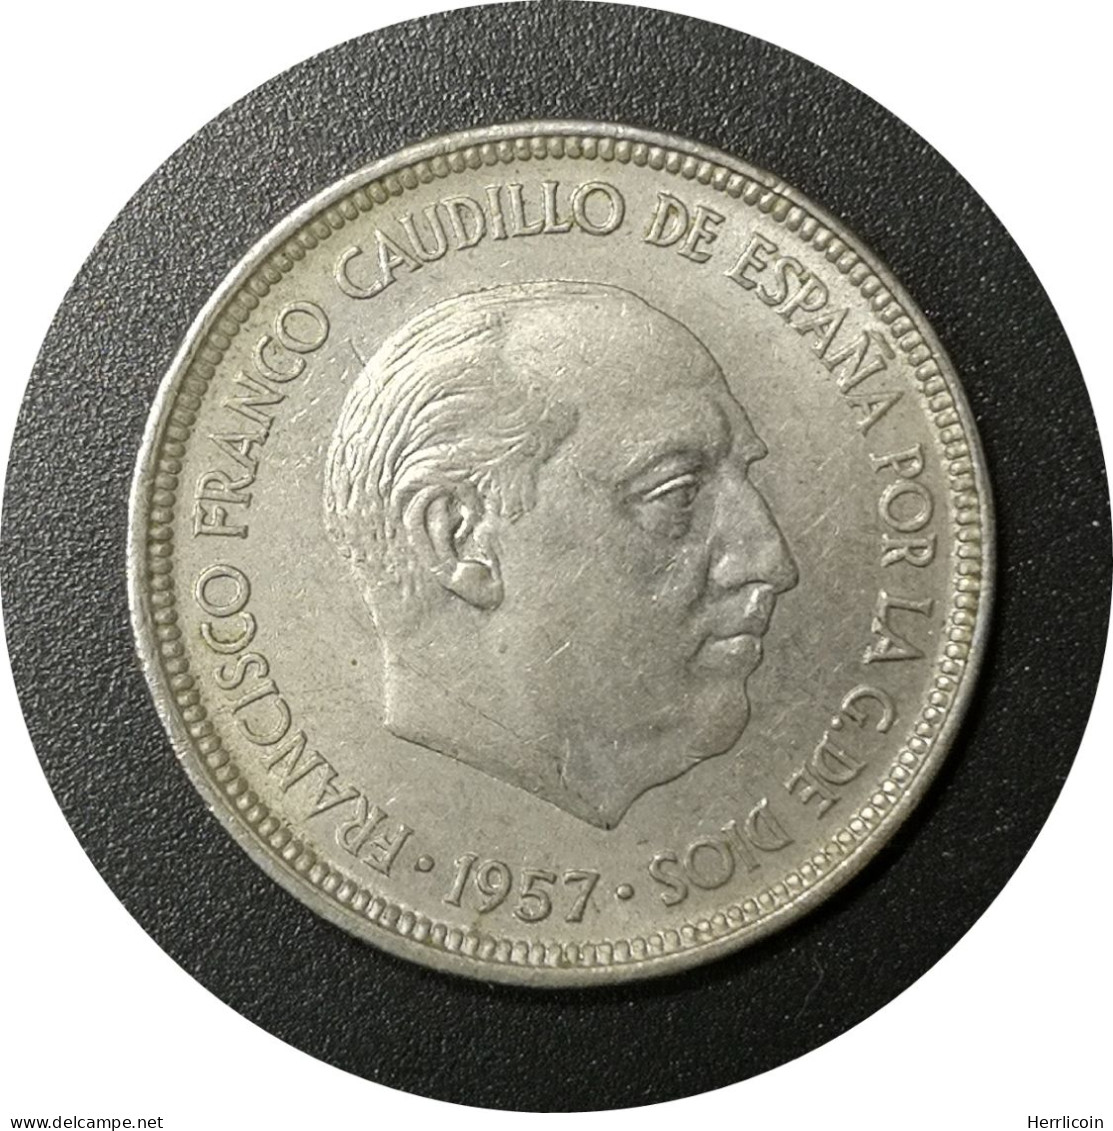 Monnaie Espagne - 1957 (1960) - 5 Pesetas Franco - 5 Pesetas